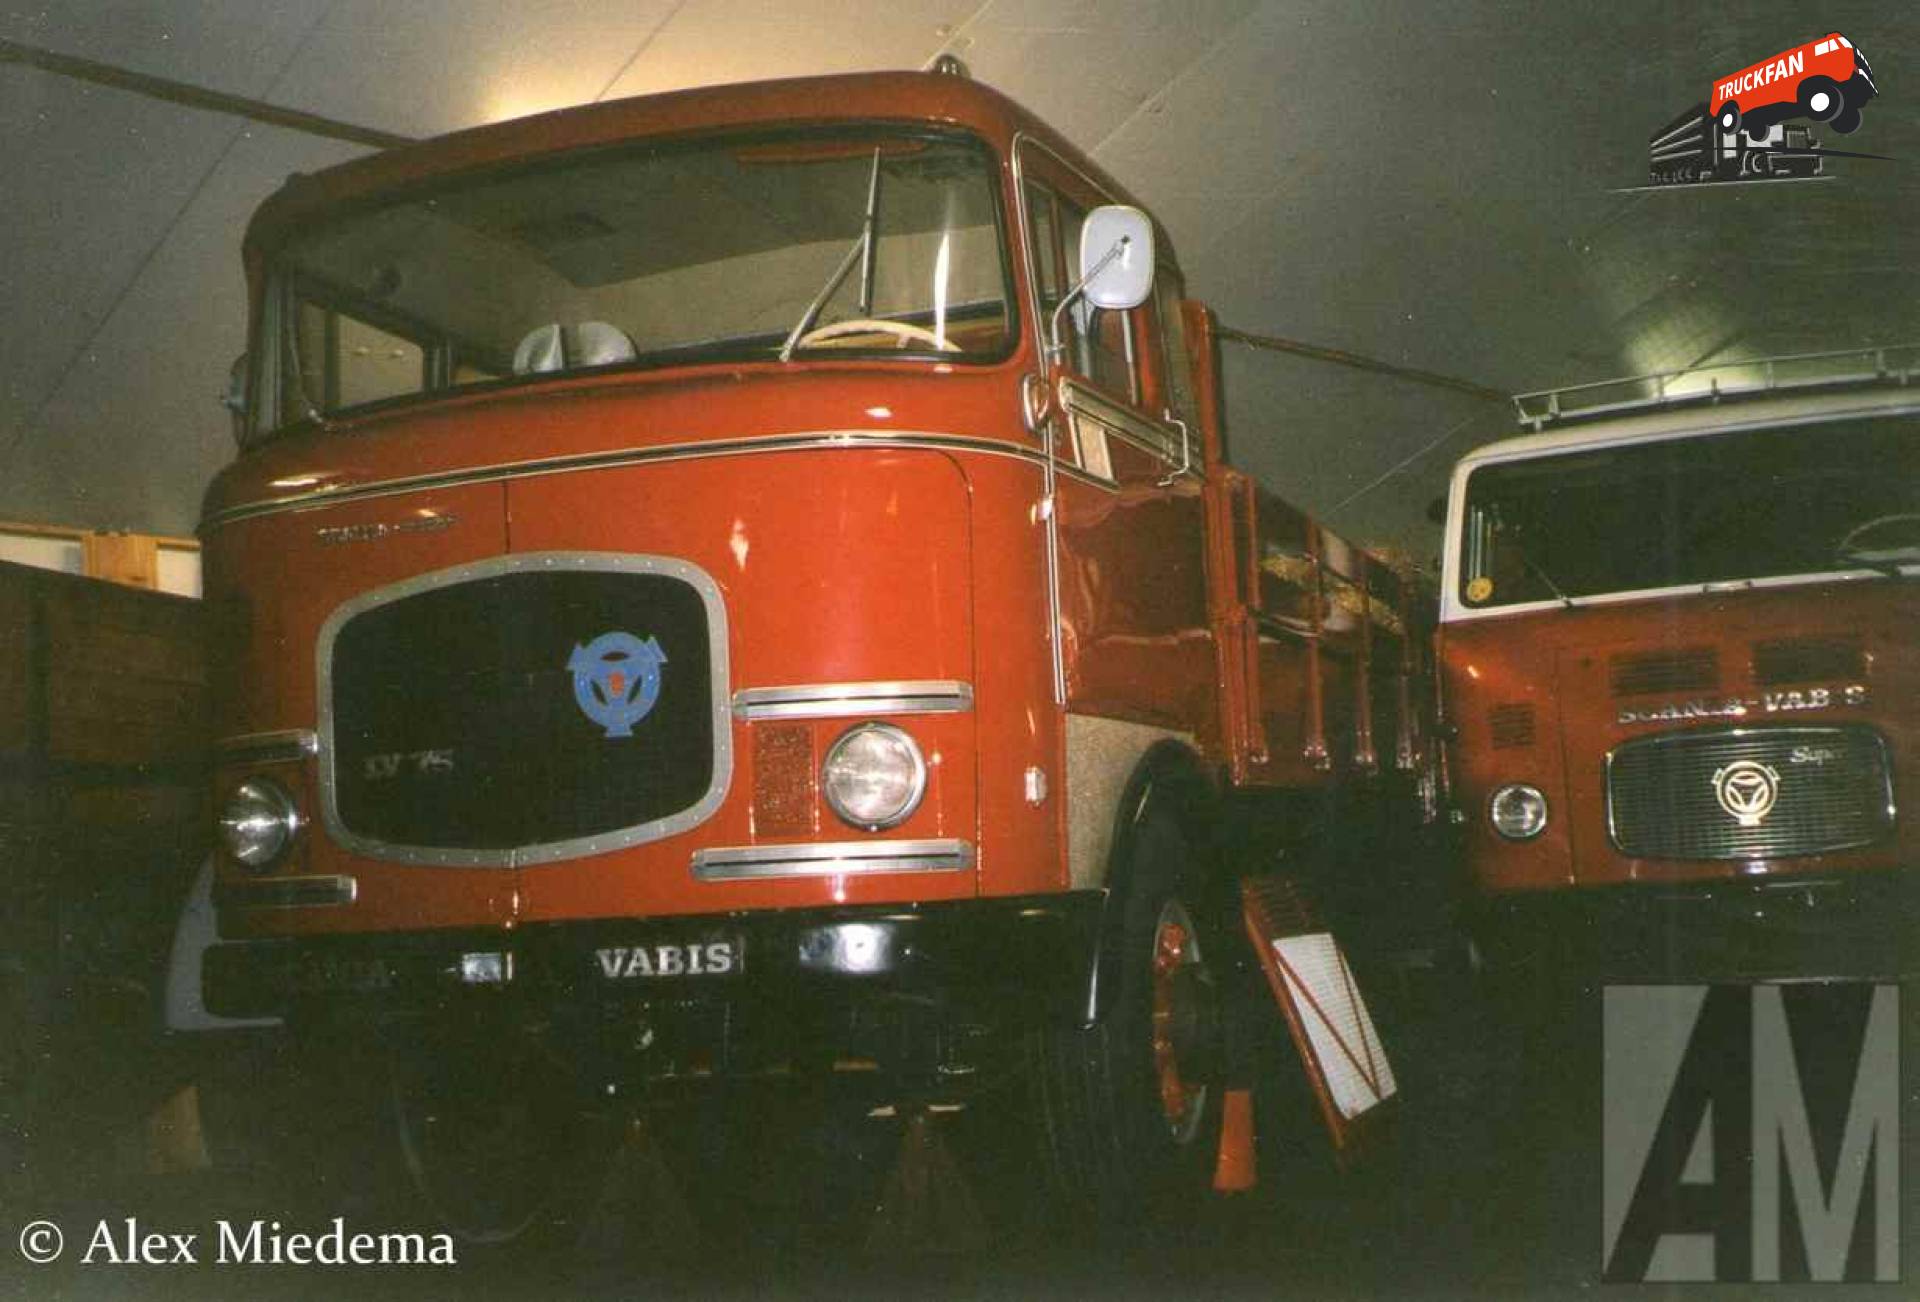 Scania-Vabis LV75